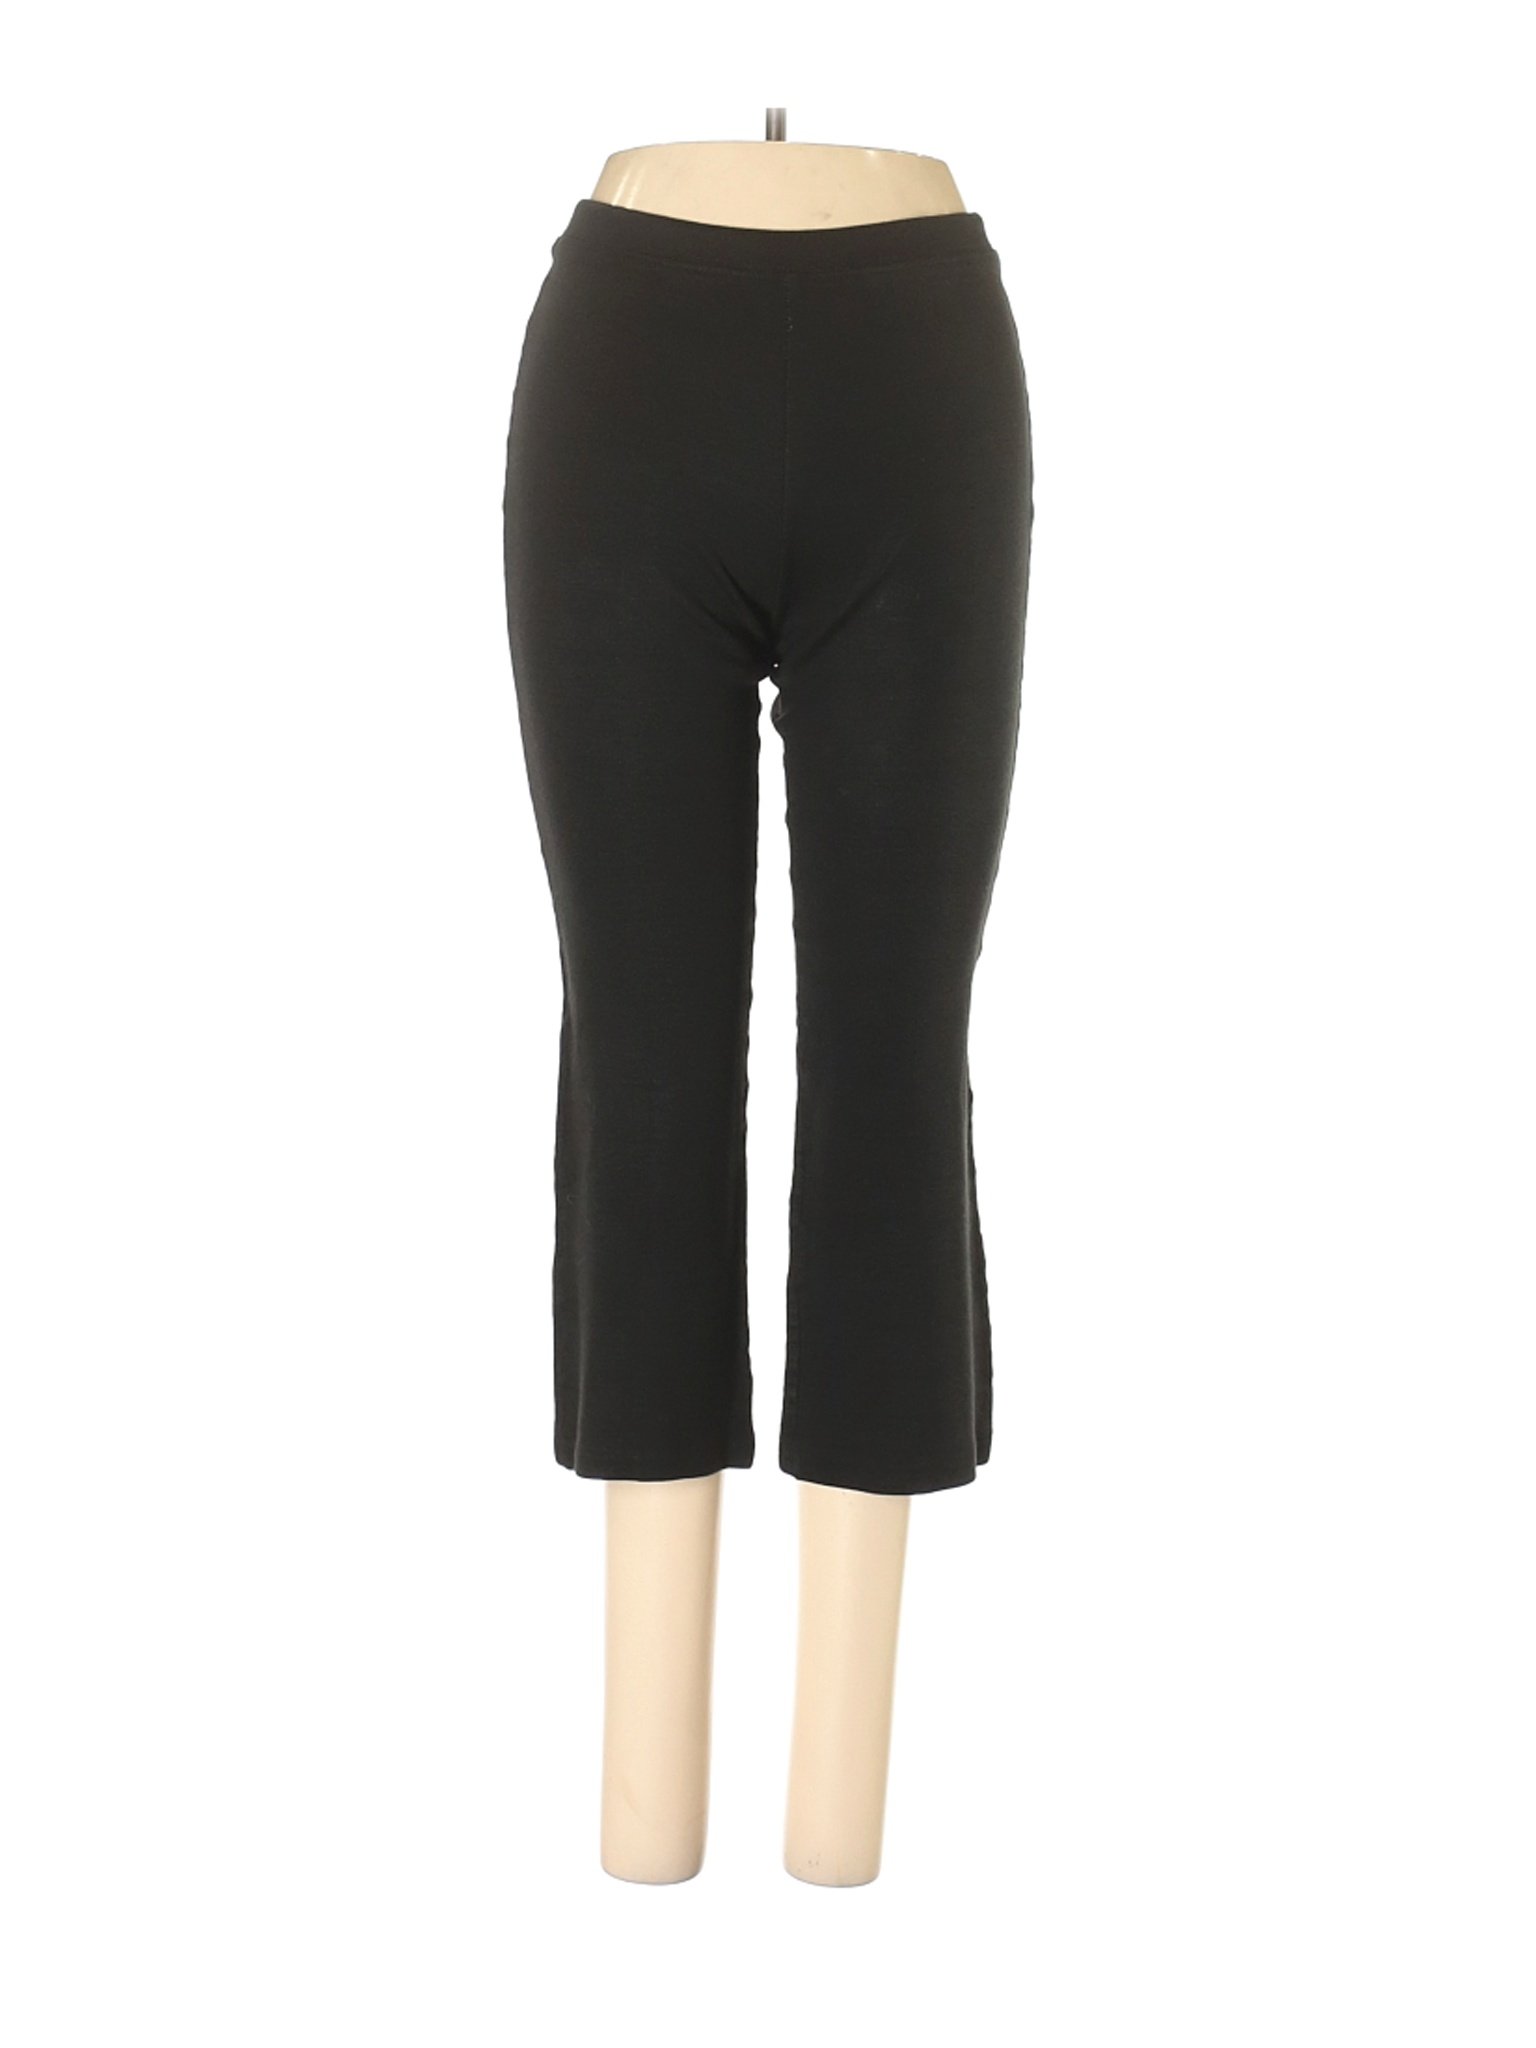 Charlotte Russe Women Black Casual Pants S | eBay